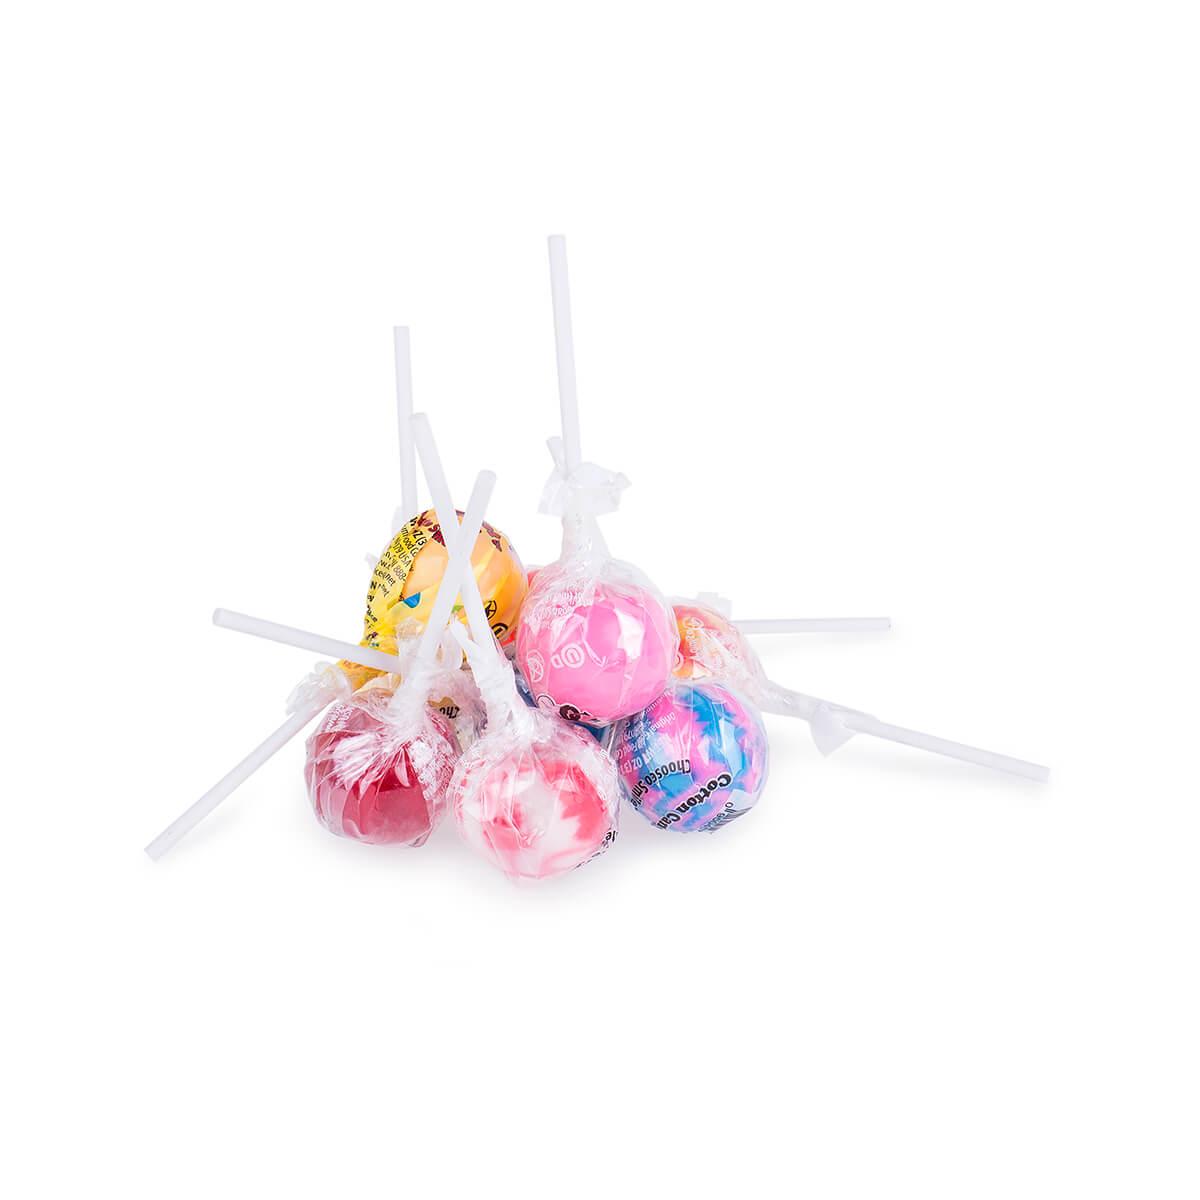 Lollipops - Most Popular Treats & Fun Facts - Snack History